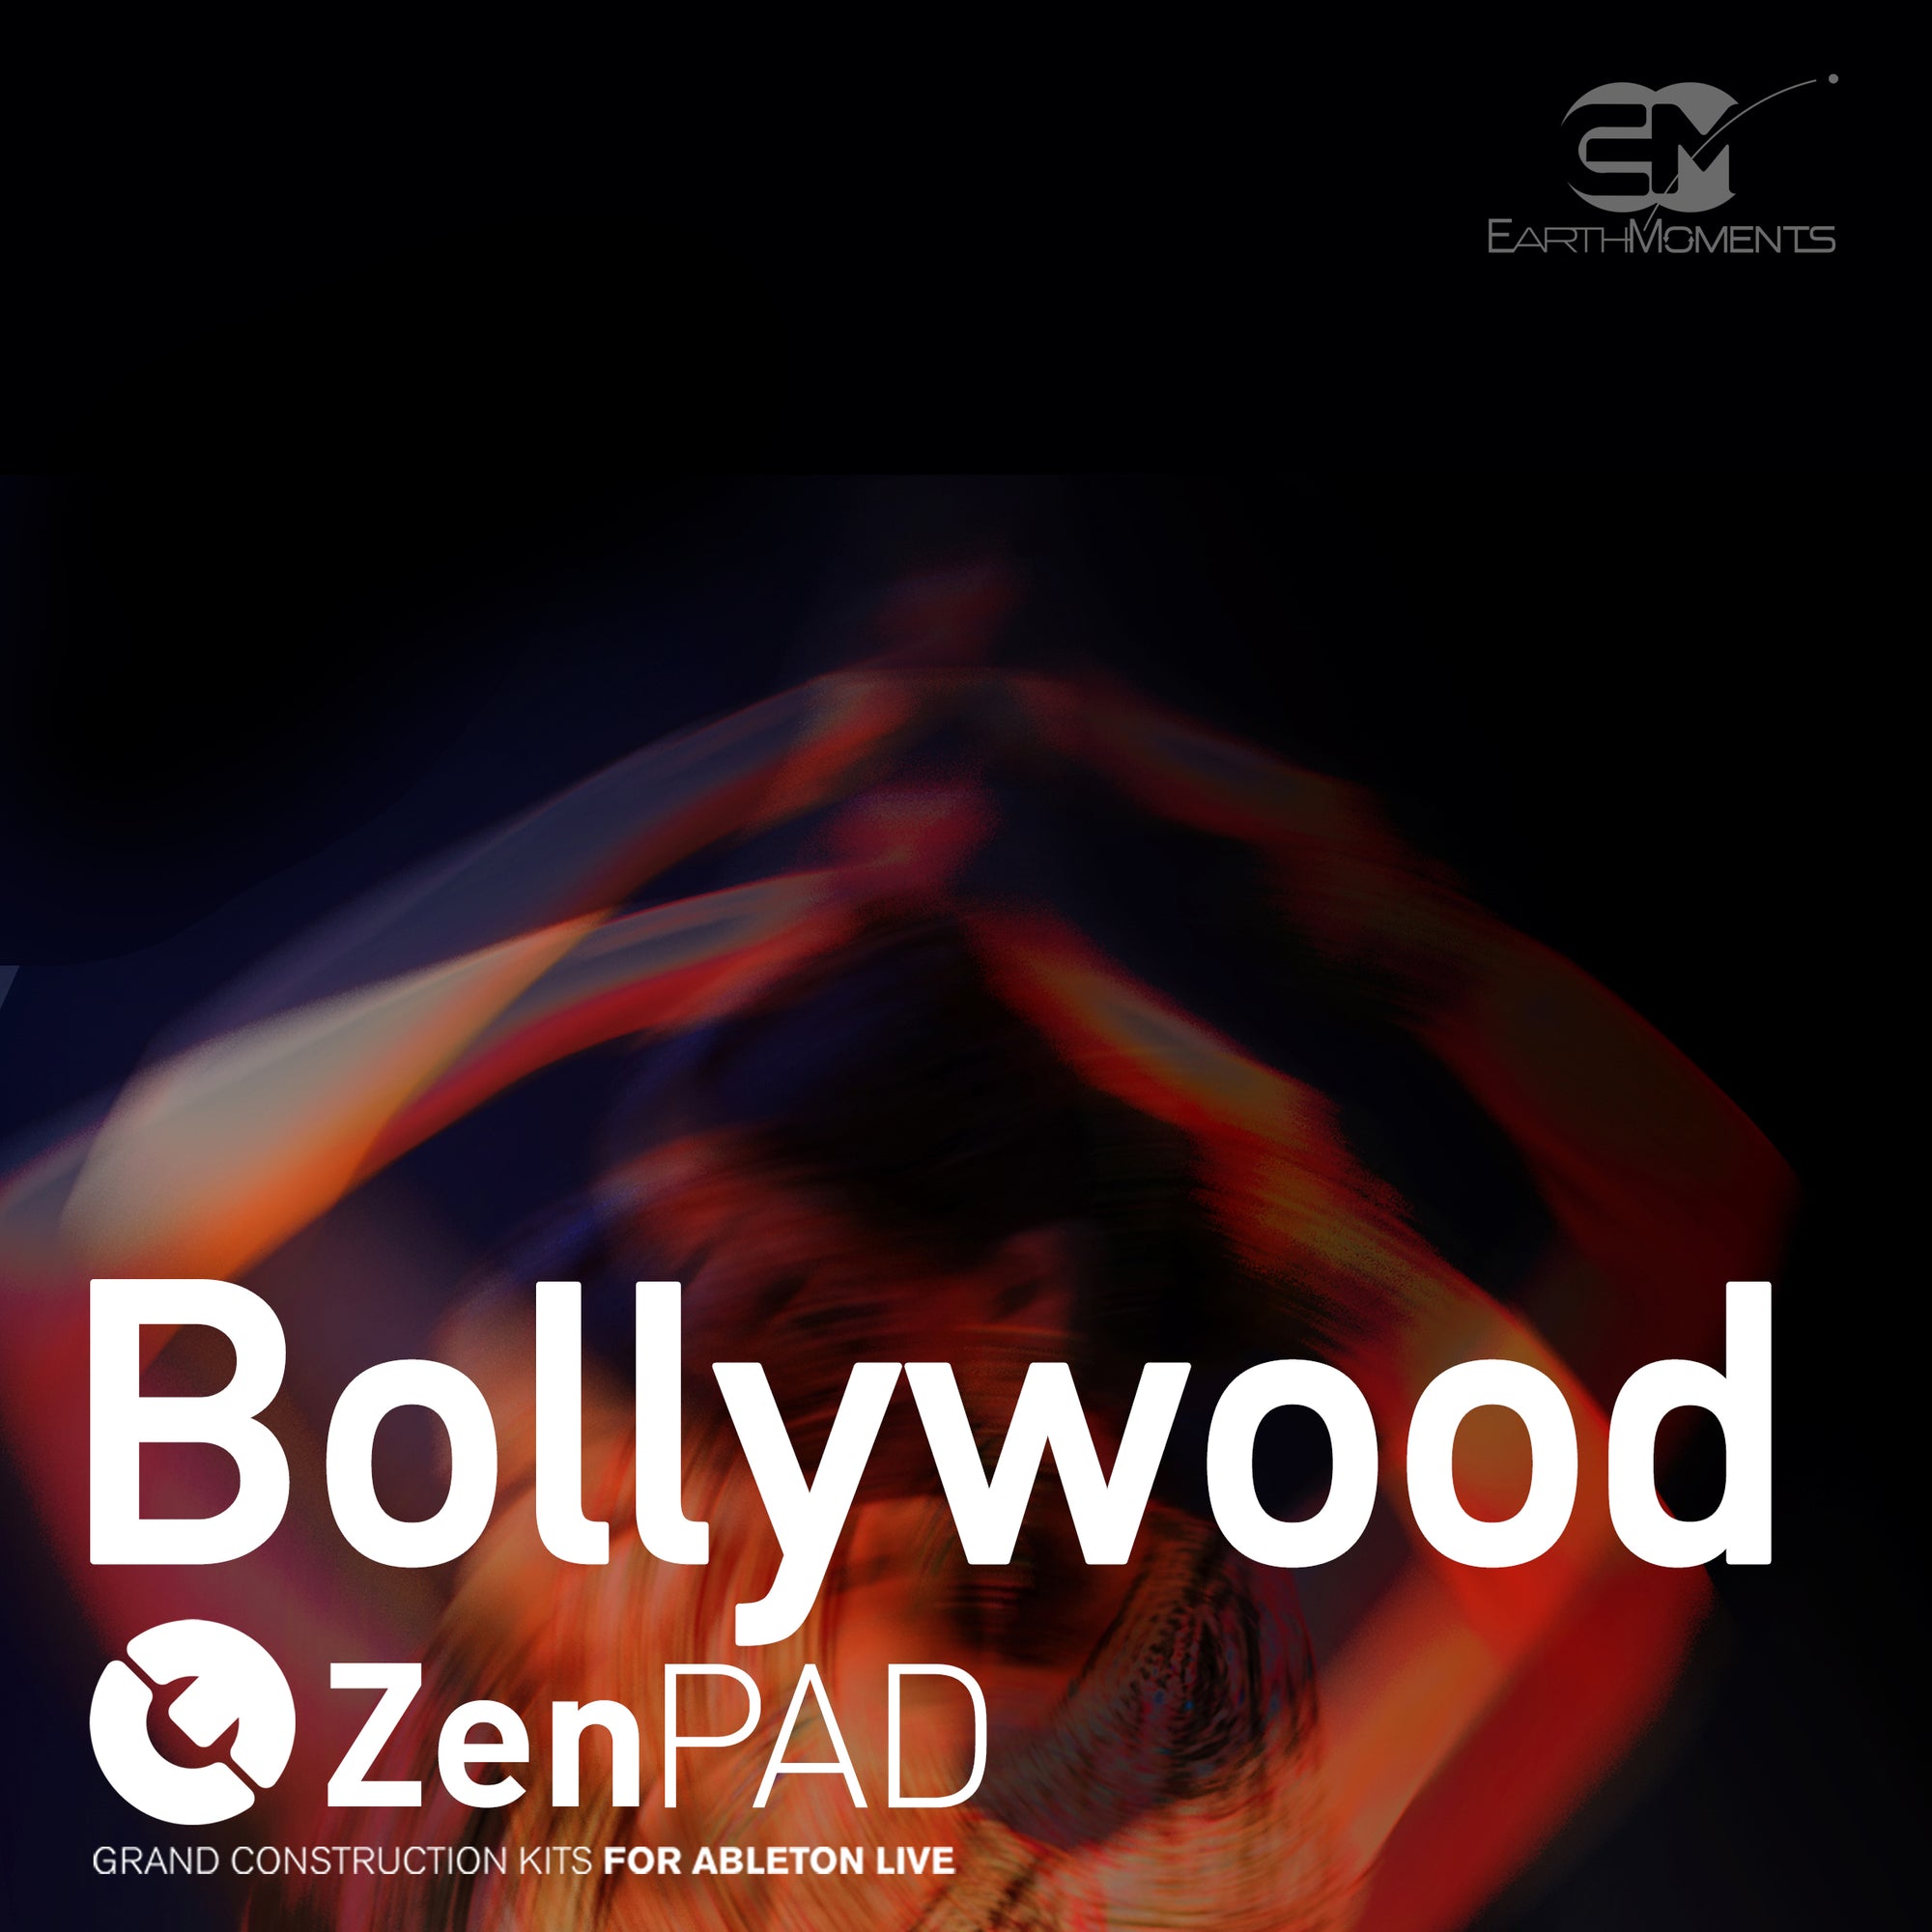 ZenPad Bollywood / Grand Construction Kit for Ableton Live